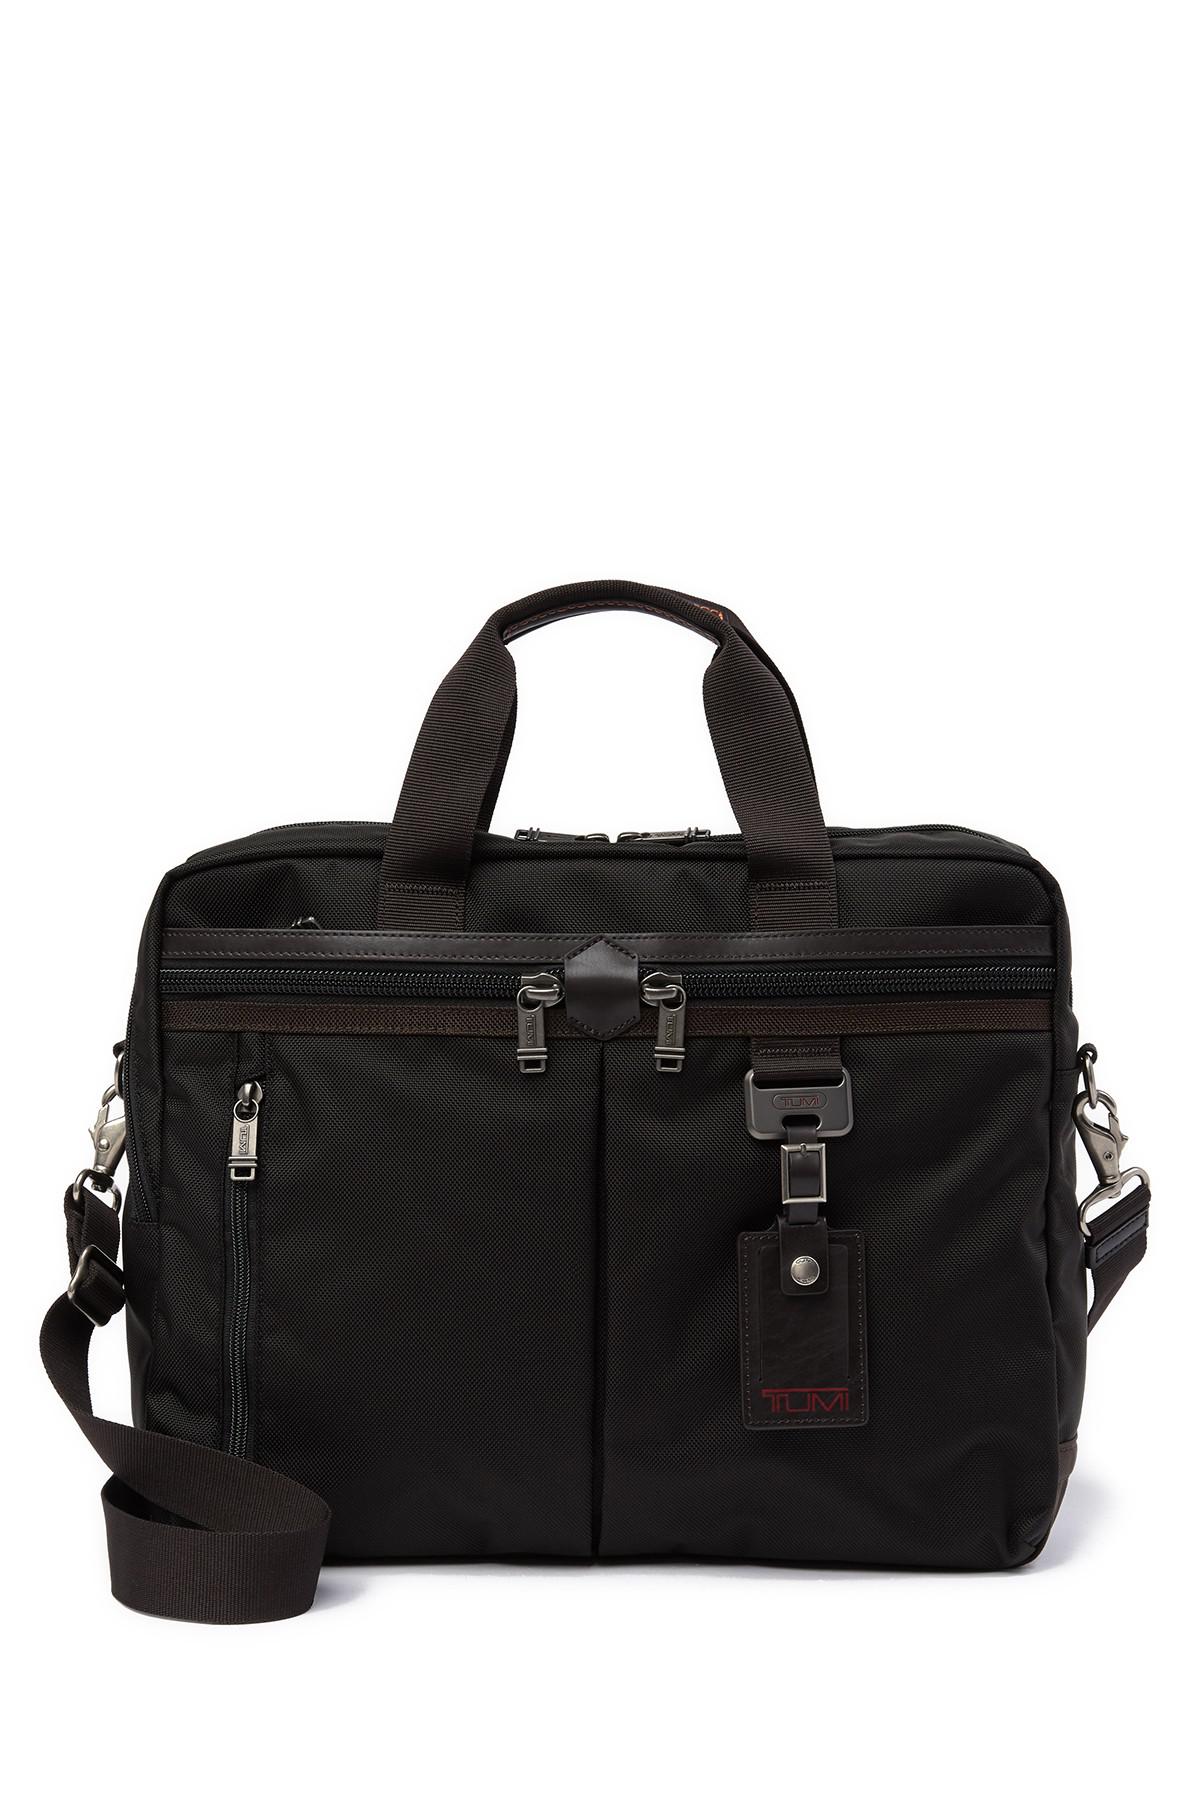 Tumi Densmore Medium Top Zip Briefcase in Black for Men | Lyst